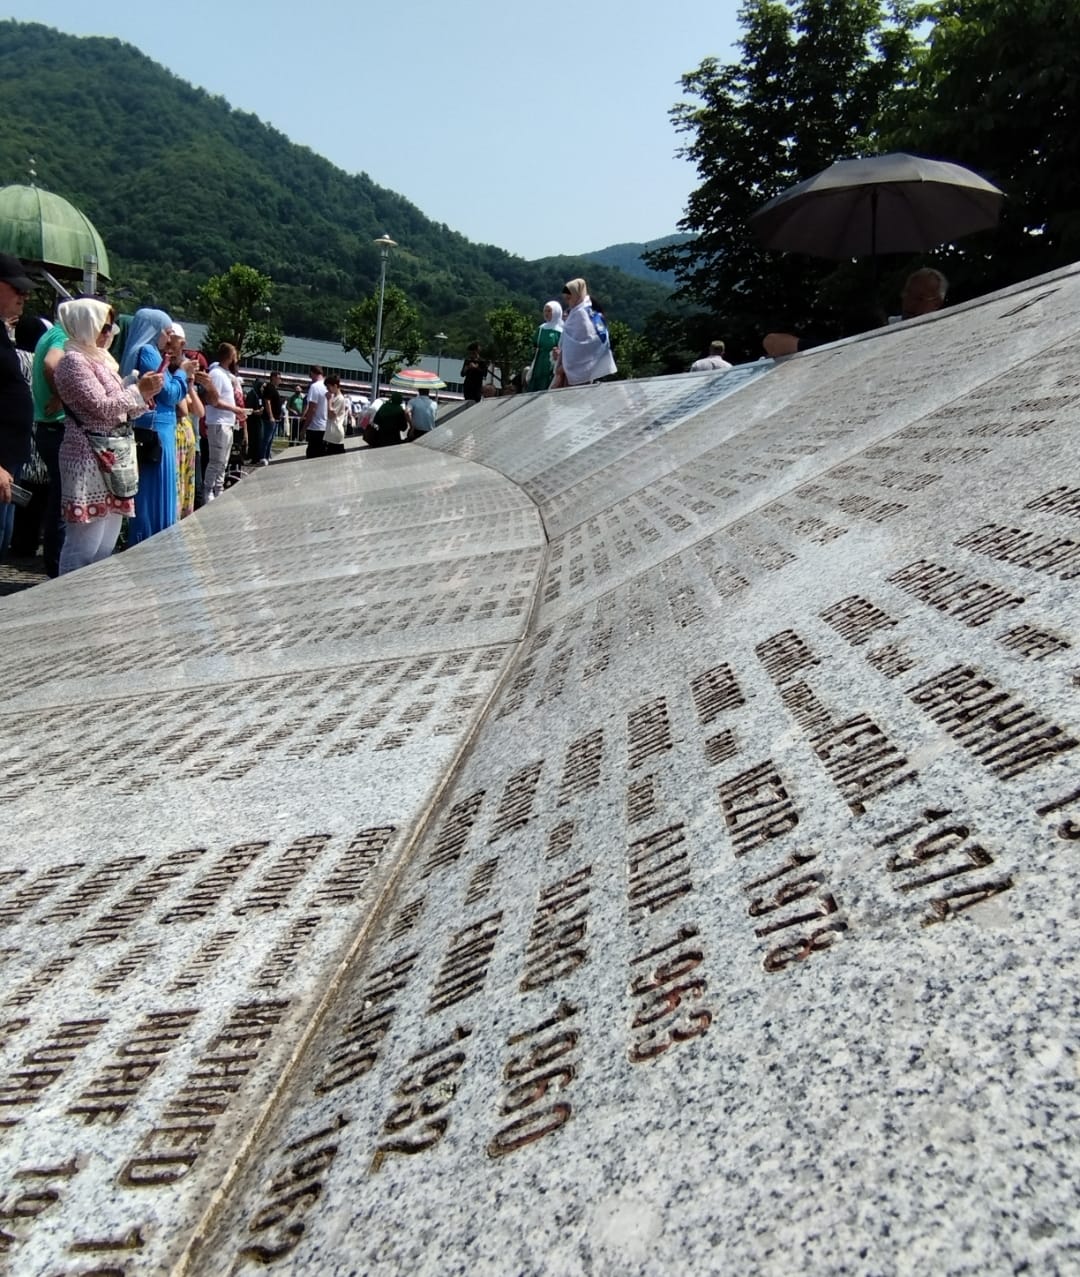 Novopazarci o Srebrenici: “NE SMEMO ZABORAVITI“ (VIDEO)